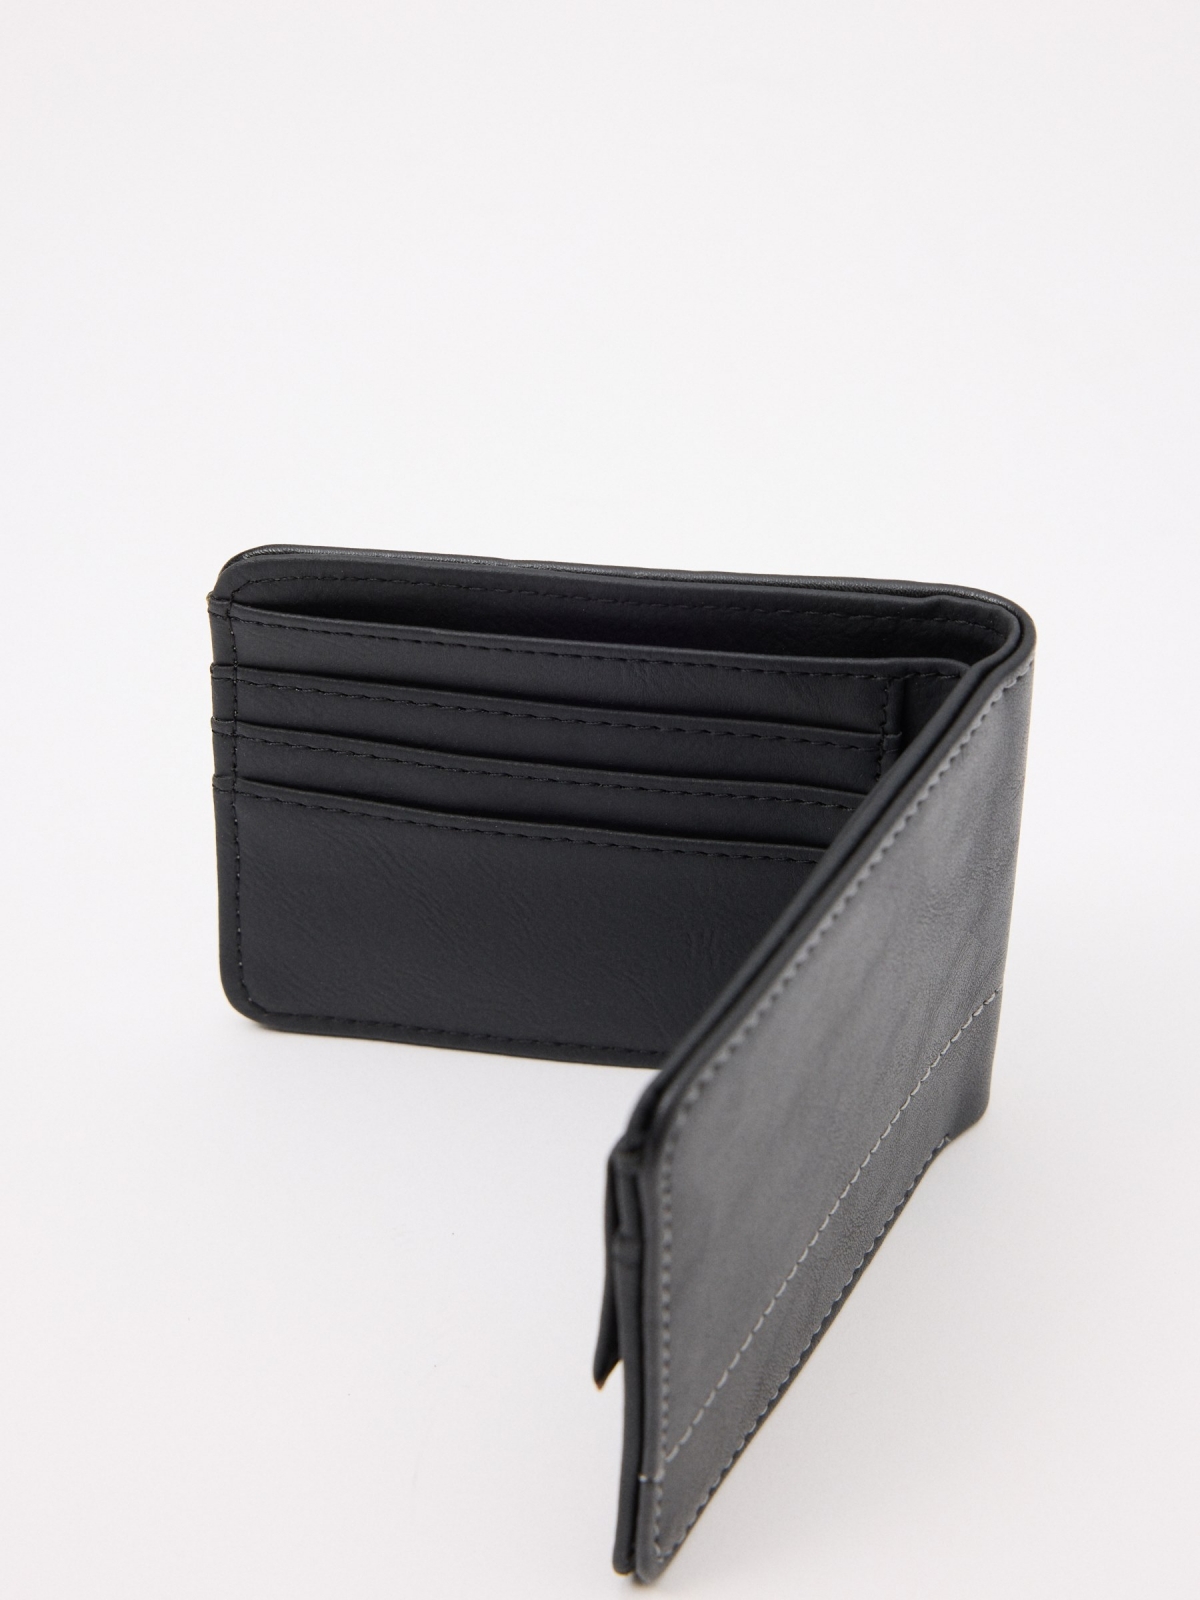 INSIDE black leatherette briefcase black detail view